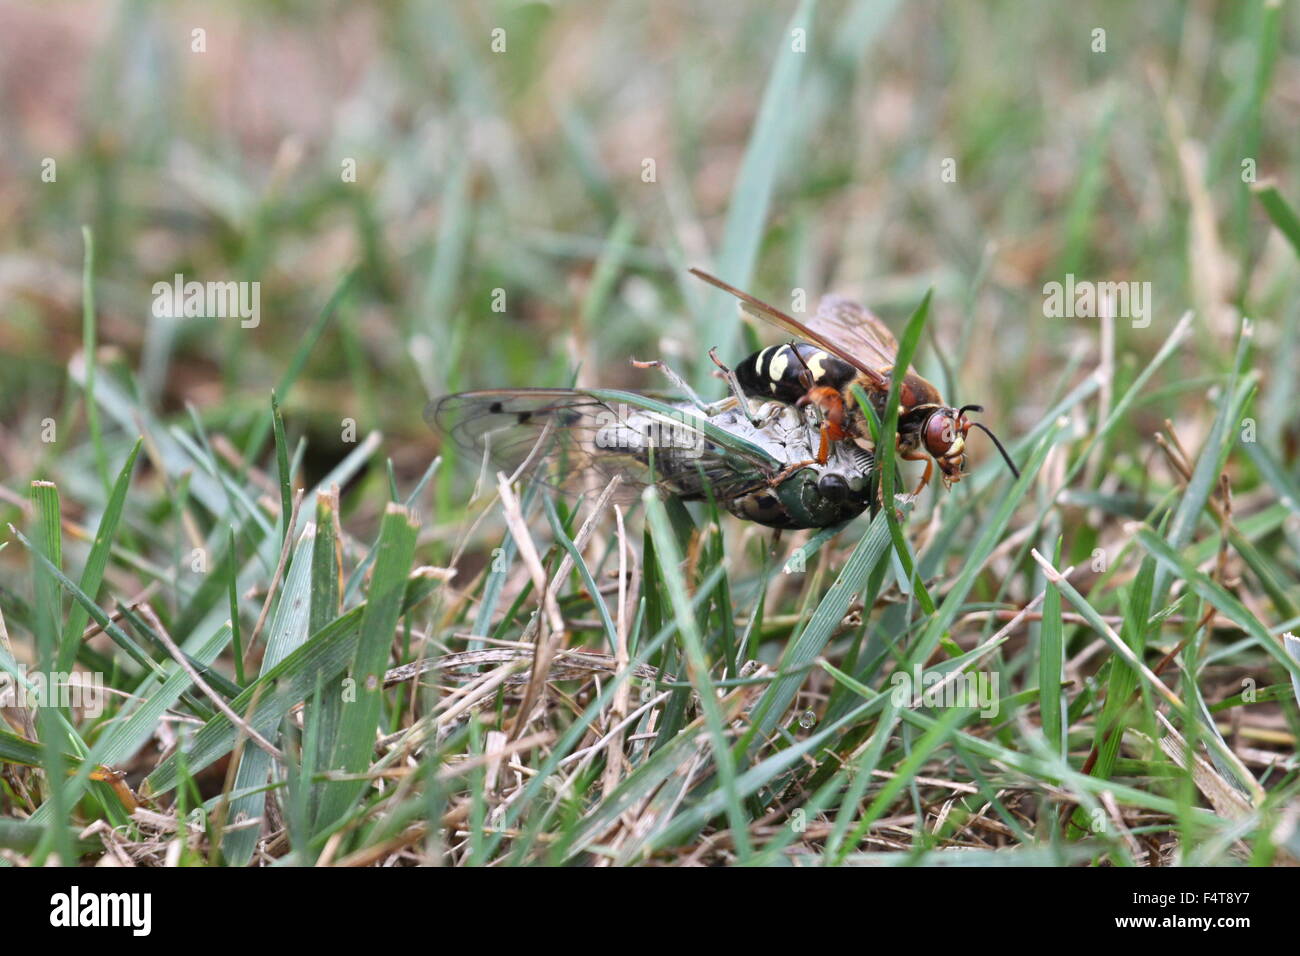 Cicala killer trascinando un paralitico cicala. Foto Stock